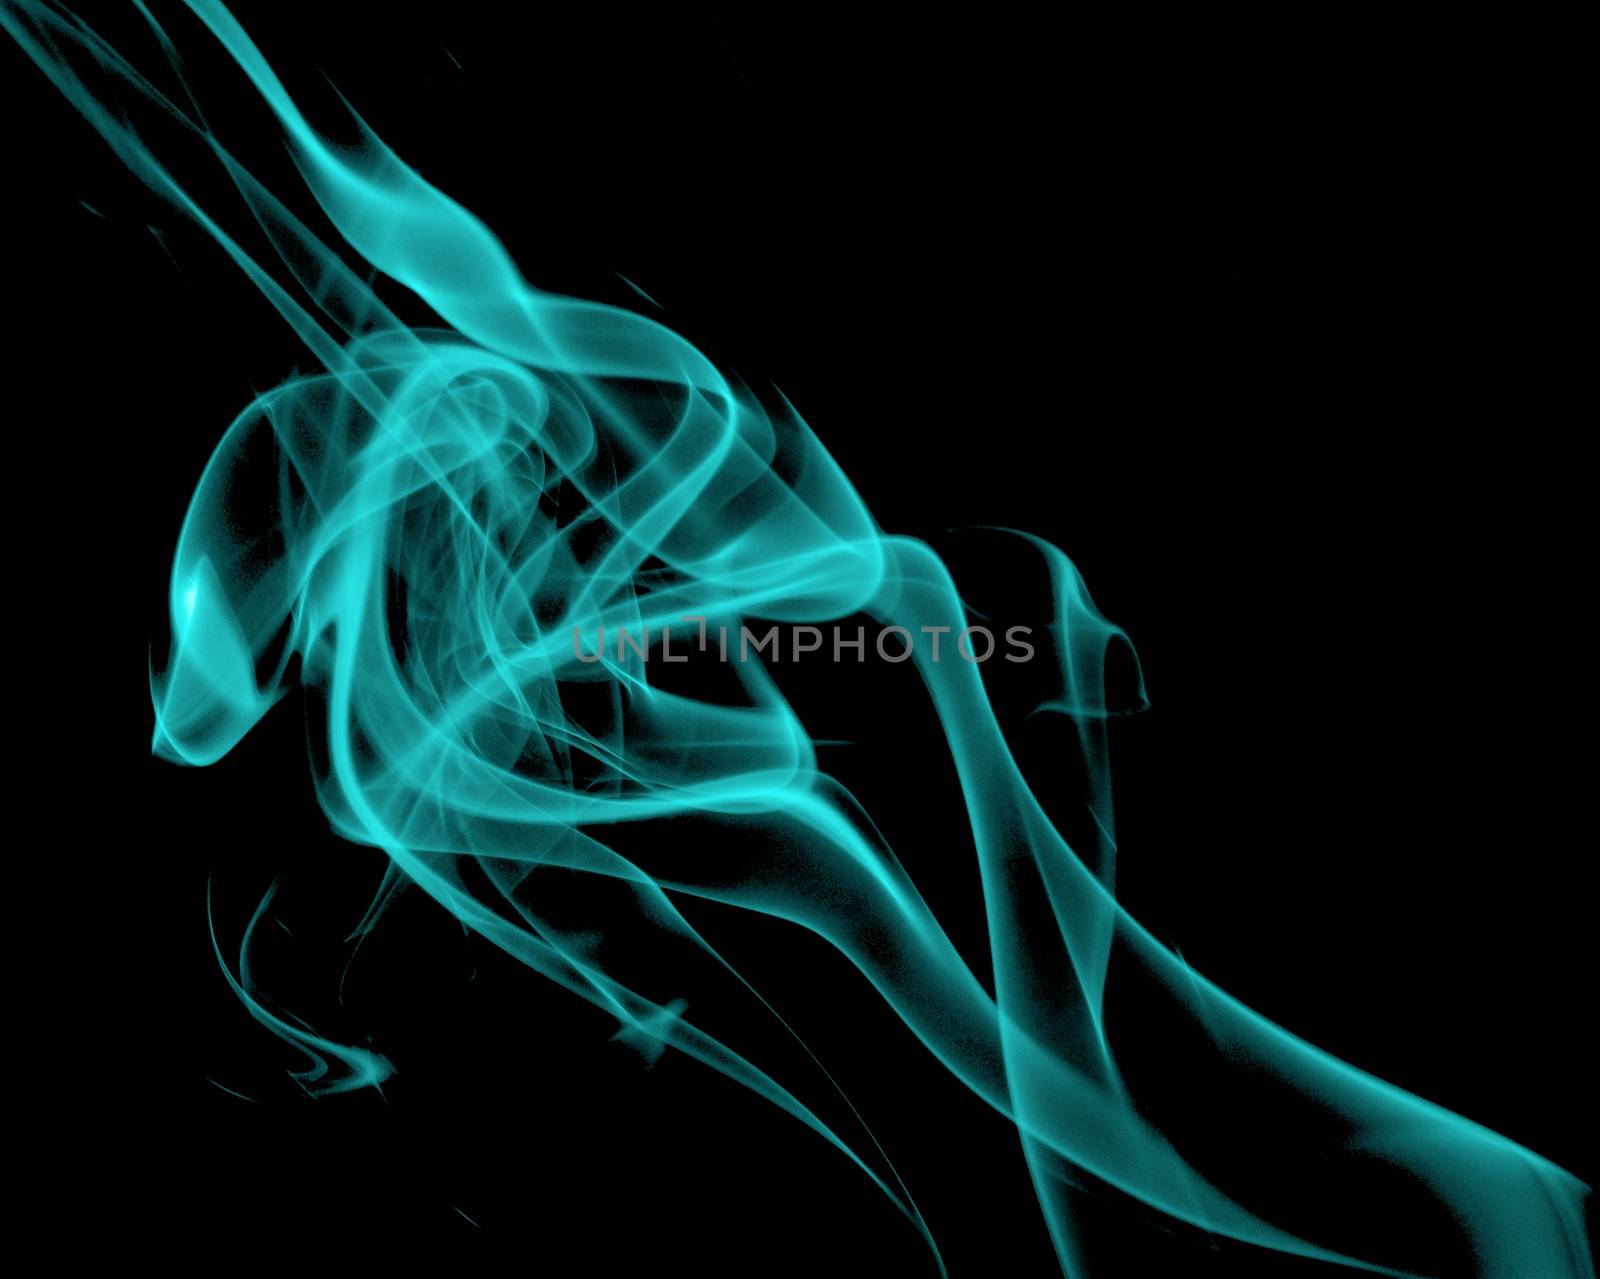 Abstract Fancy Turquoise Smoke Figures on Black background